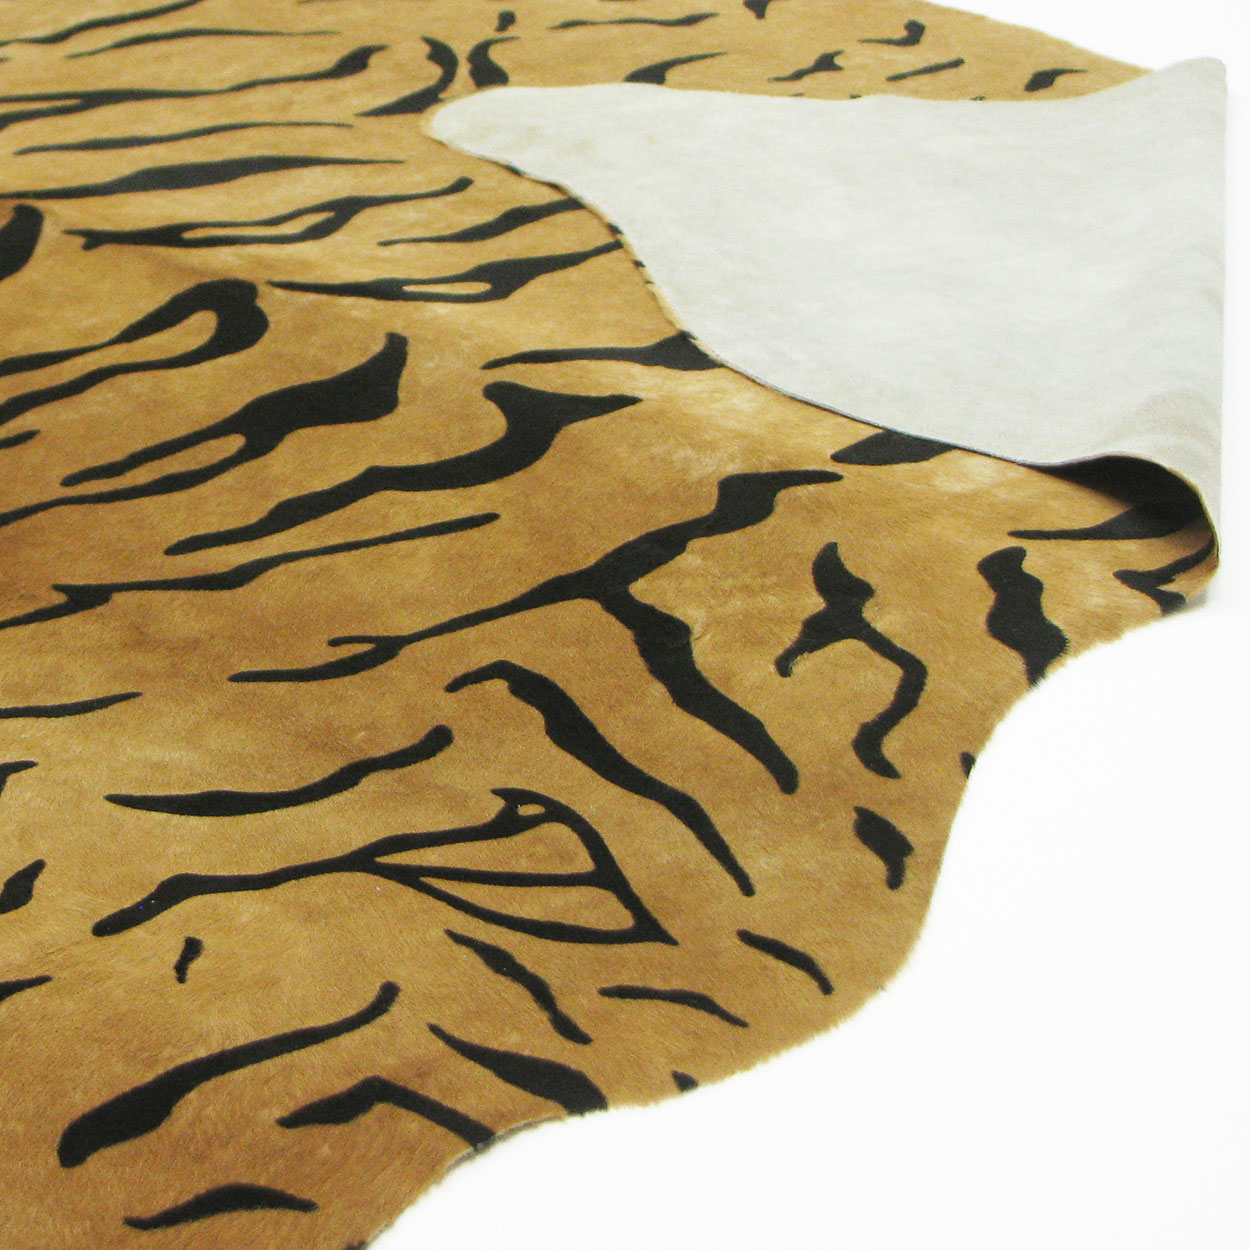 322302 - Safari Stenciled Tiger Print on Caramel Premium Cowhide